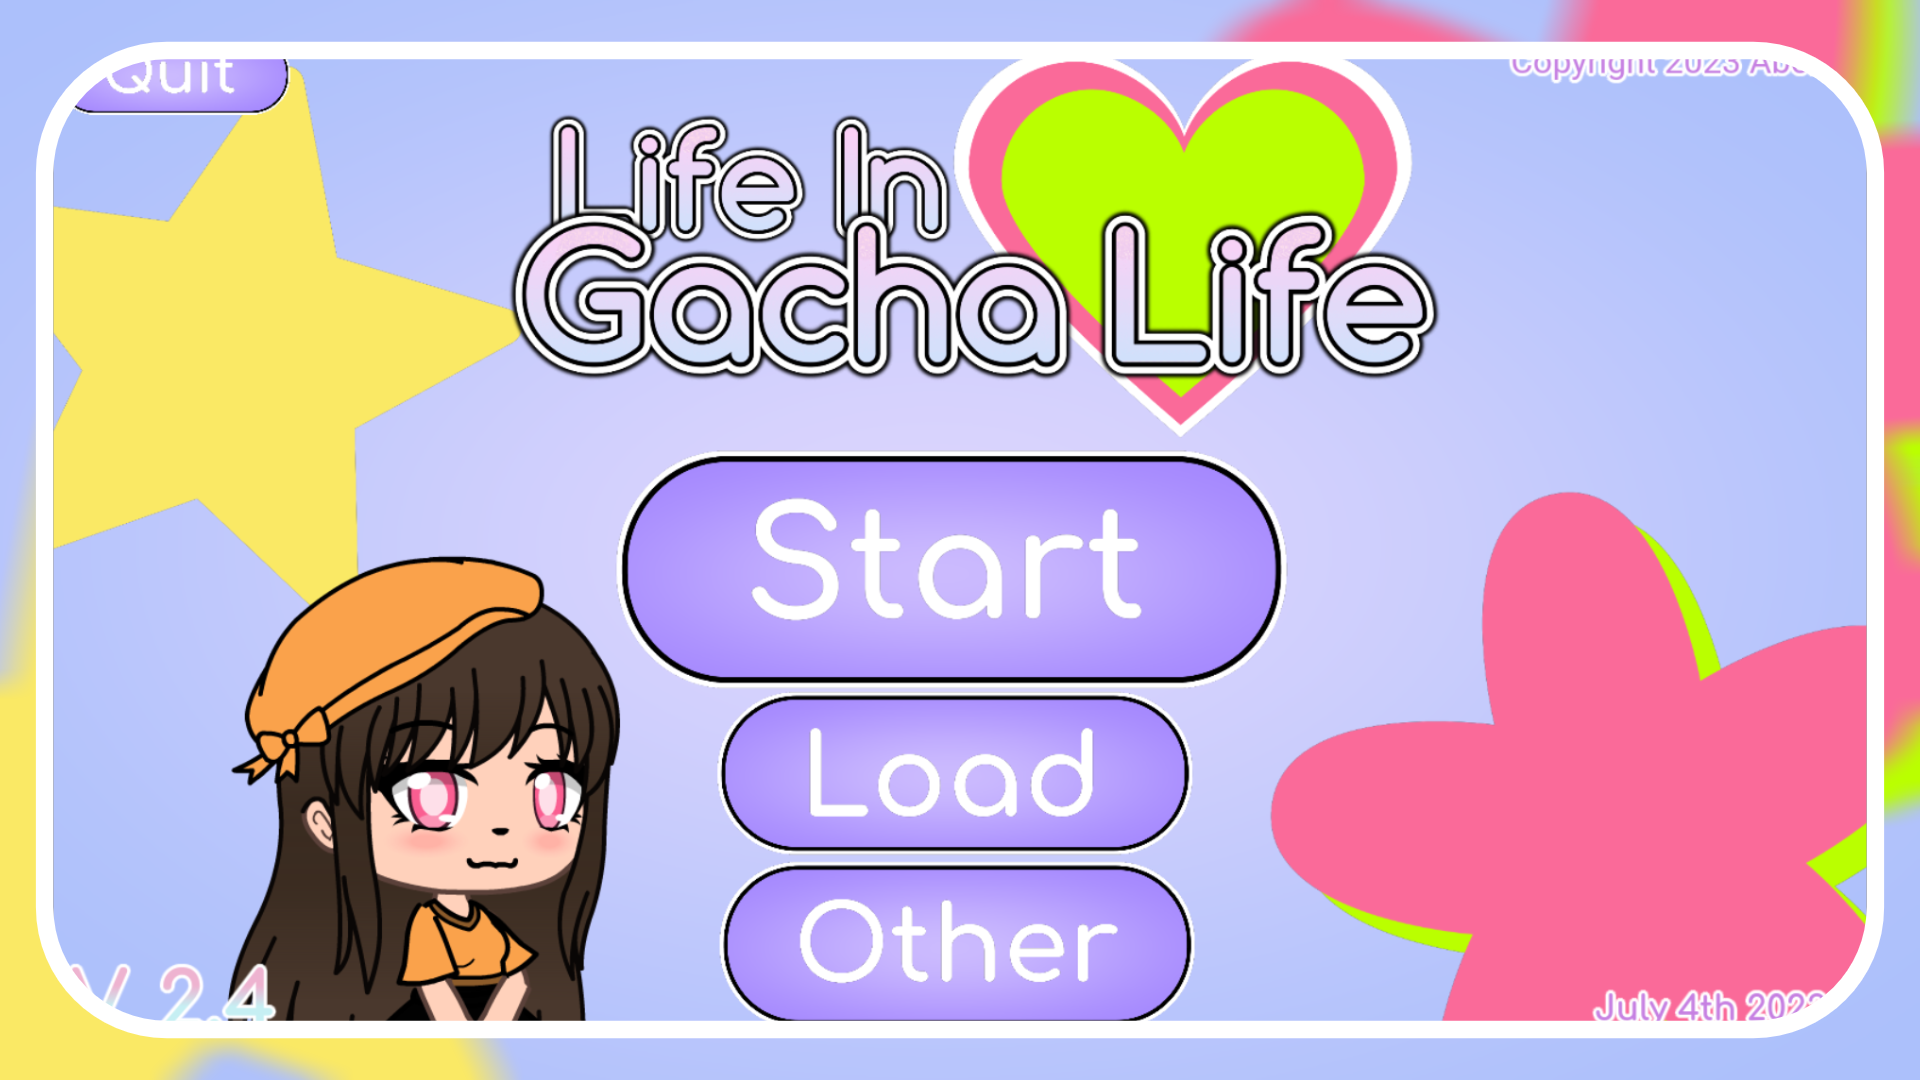 GACHA EDITX👀💖, Download New Gacha Life MOD✨